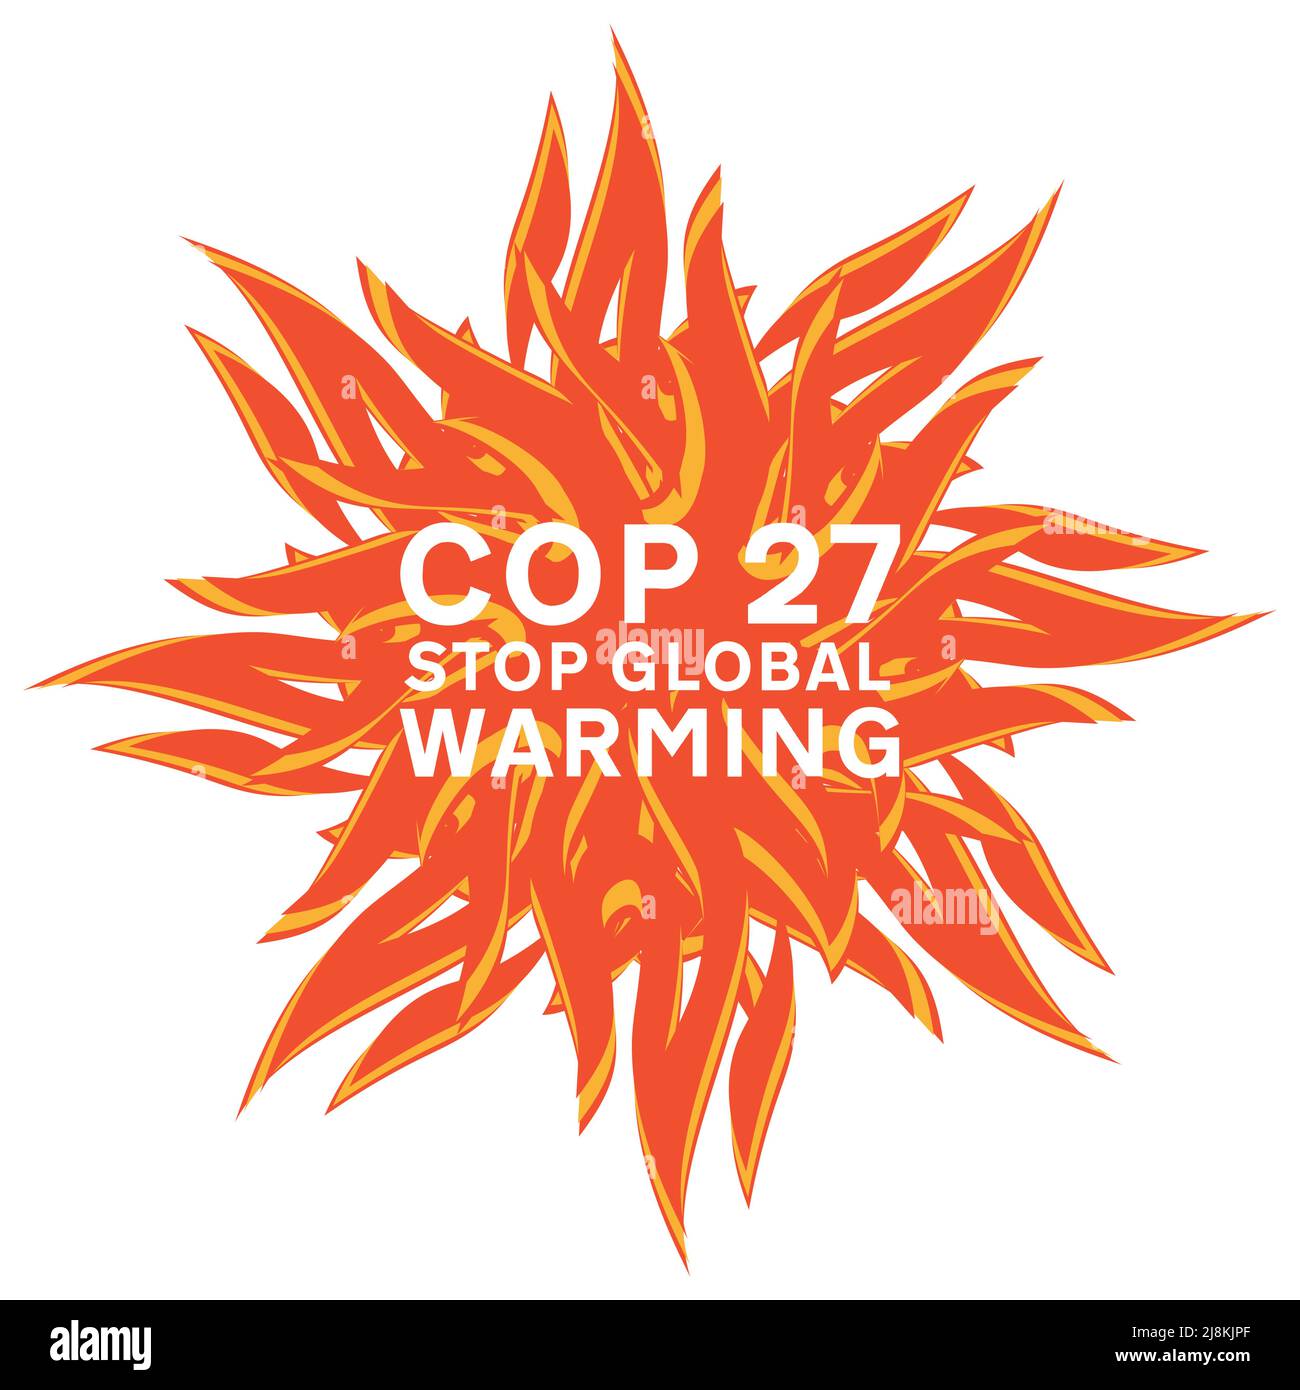 COP 27 - Sharm El-Sheikh, Egypt, 7-18 November 2022 - International climate summit vector illustration Stock Vector